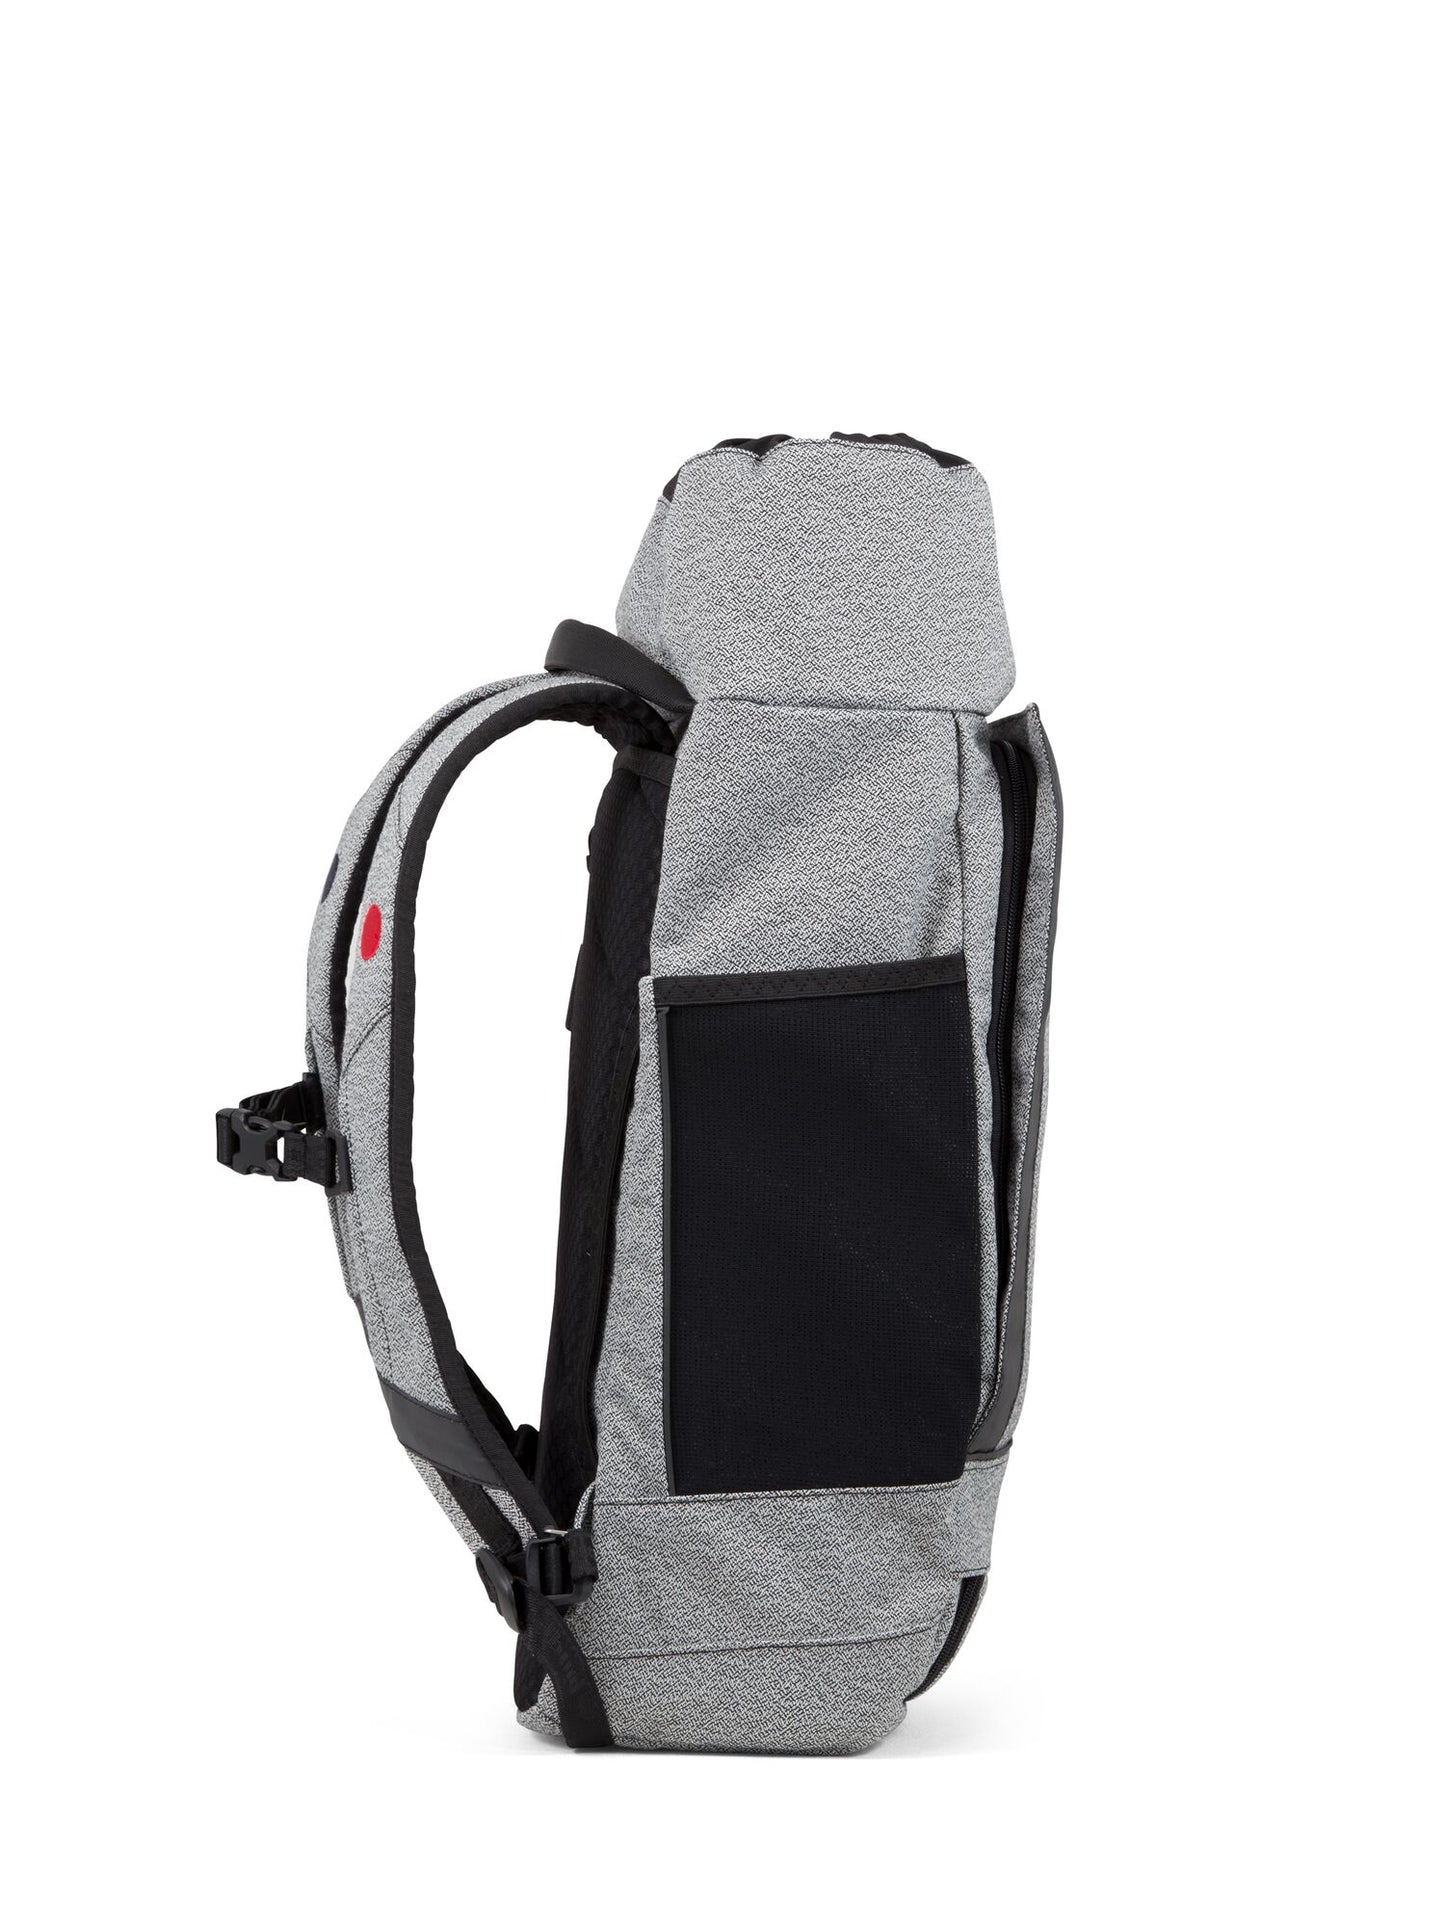 pinqponq-backpack-Blok-Medium-Vivid-Monochrome-side